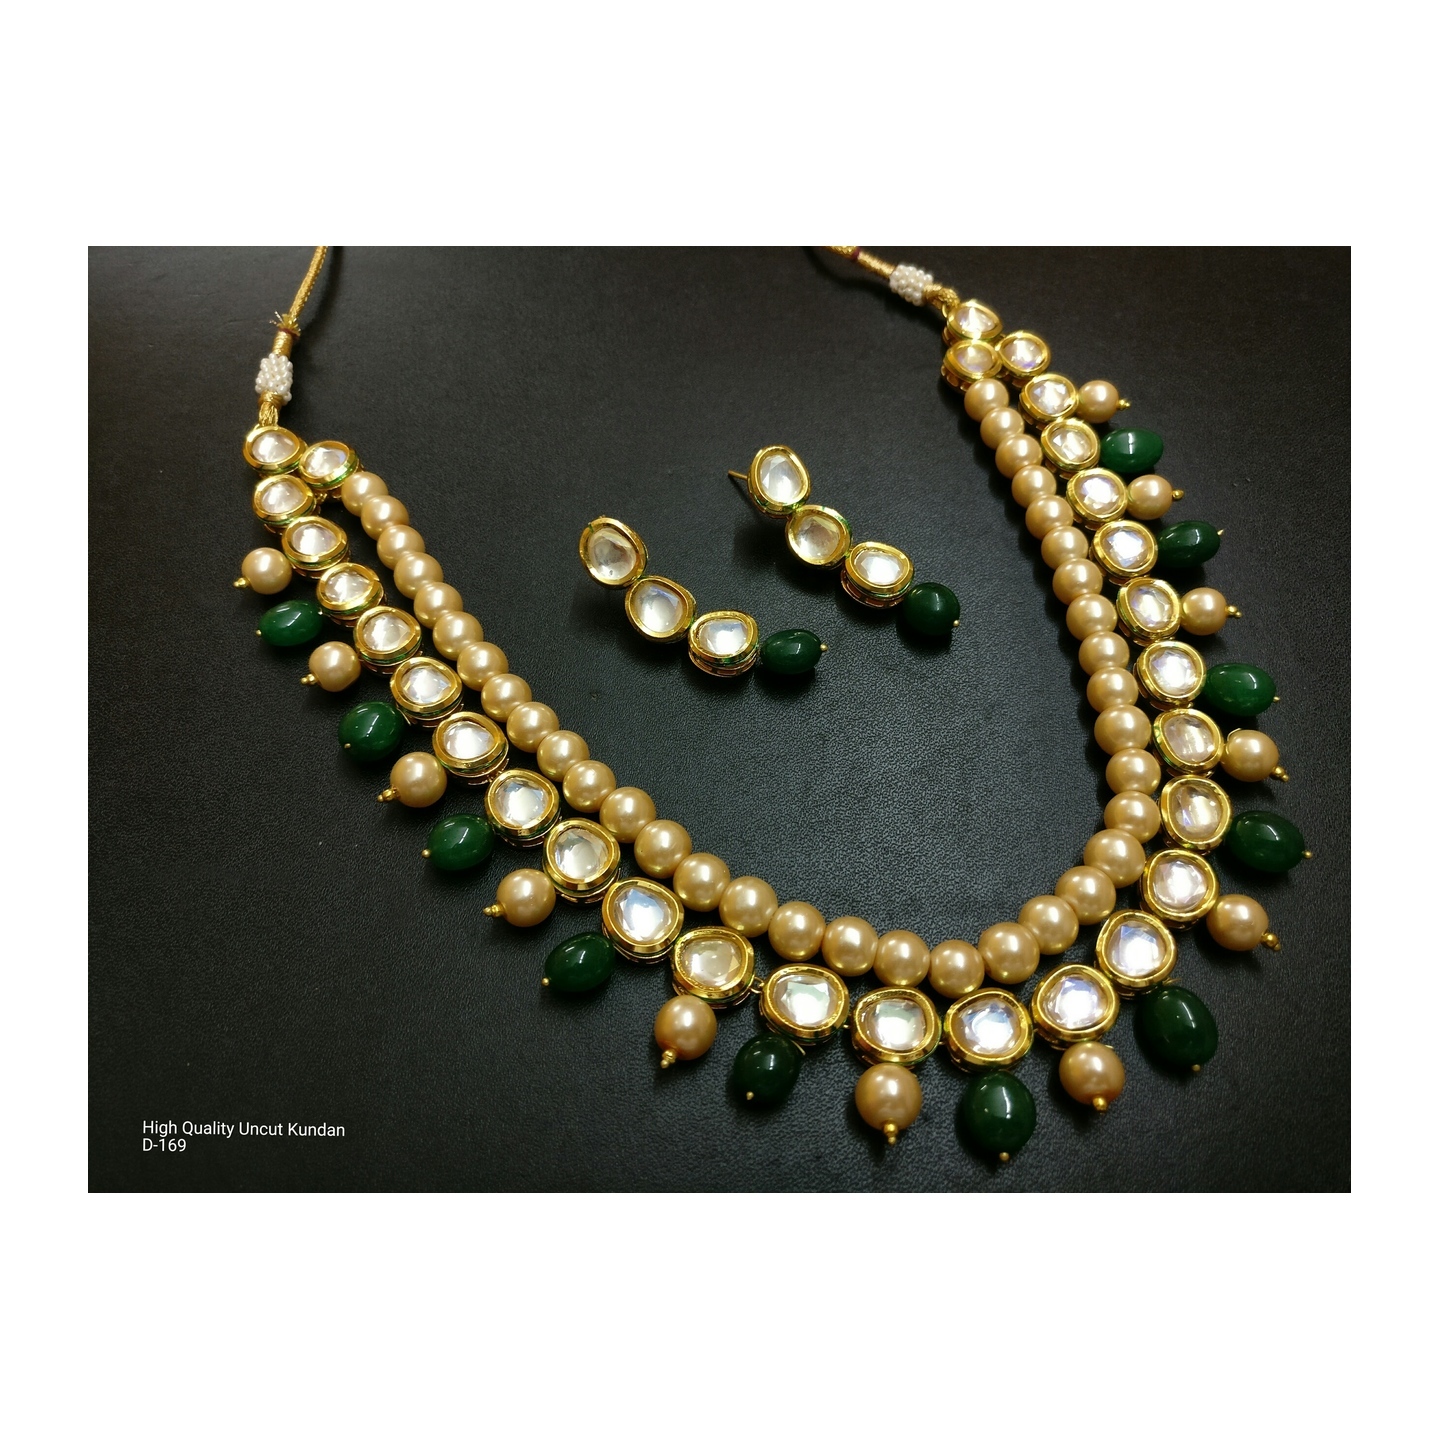 High Quality Uncut Kundan Set With Earring Green Onyx Pearls